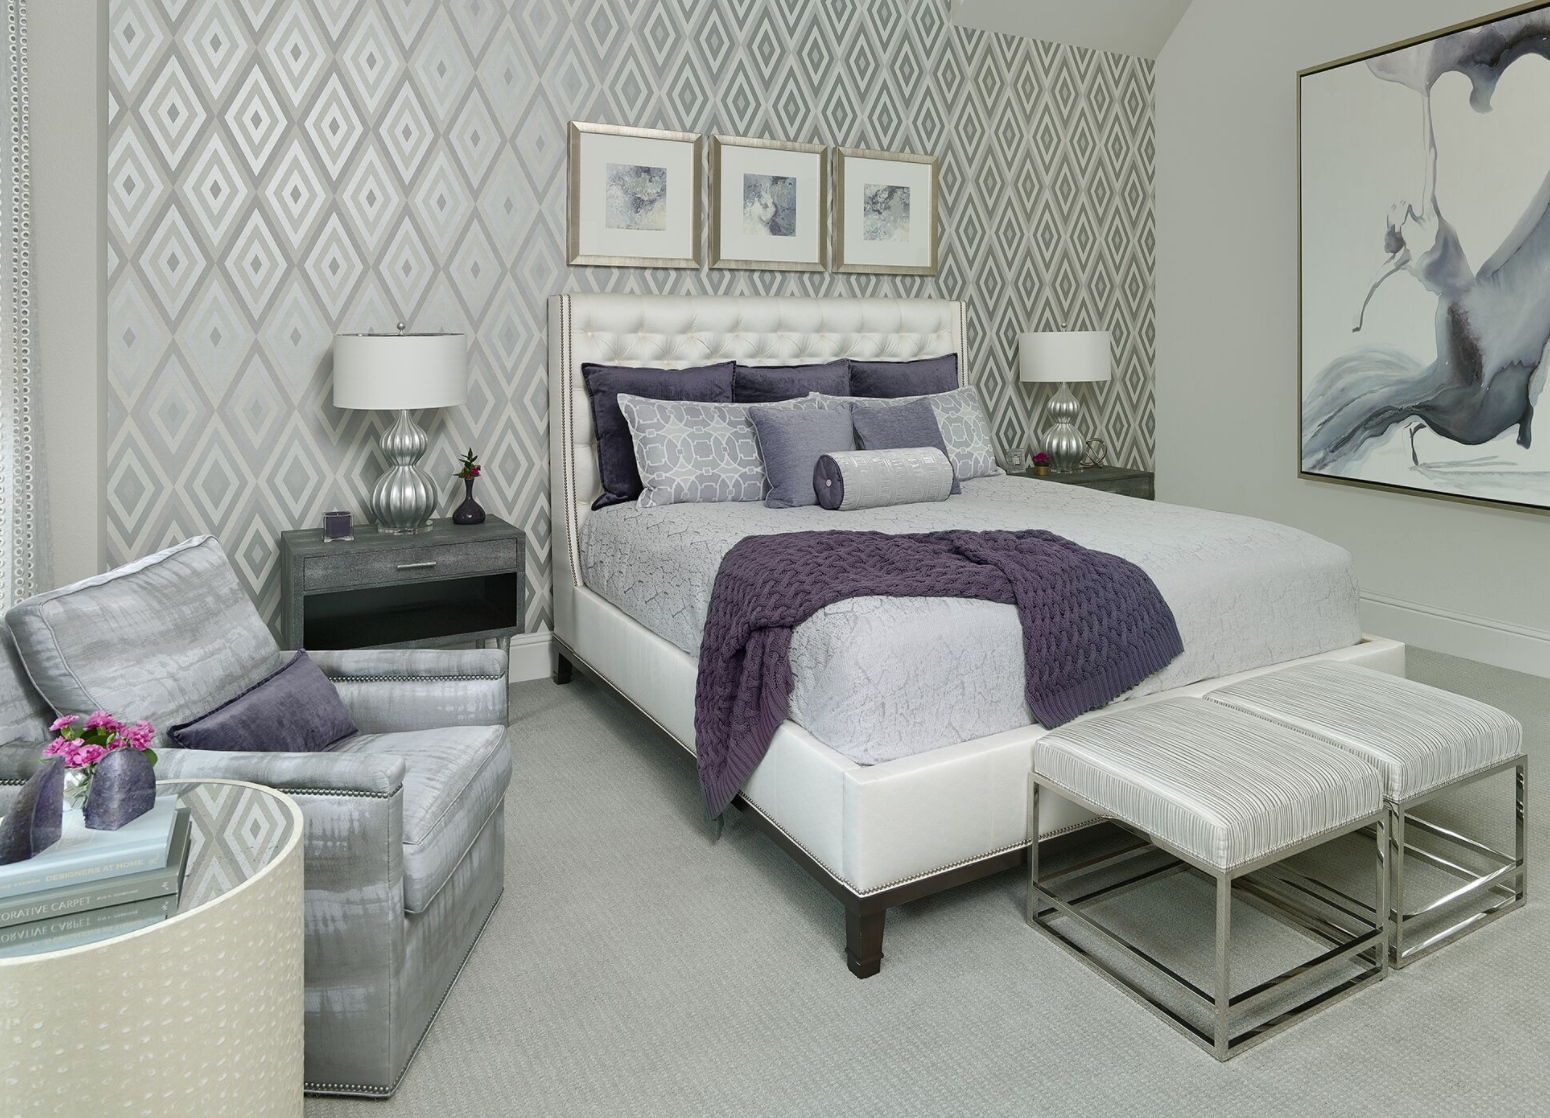 Dream Bedroom Designs We Love and Why | Interior Design Dallas | Barbara Gilbert Interiors